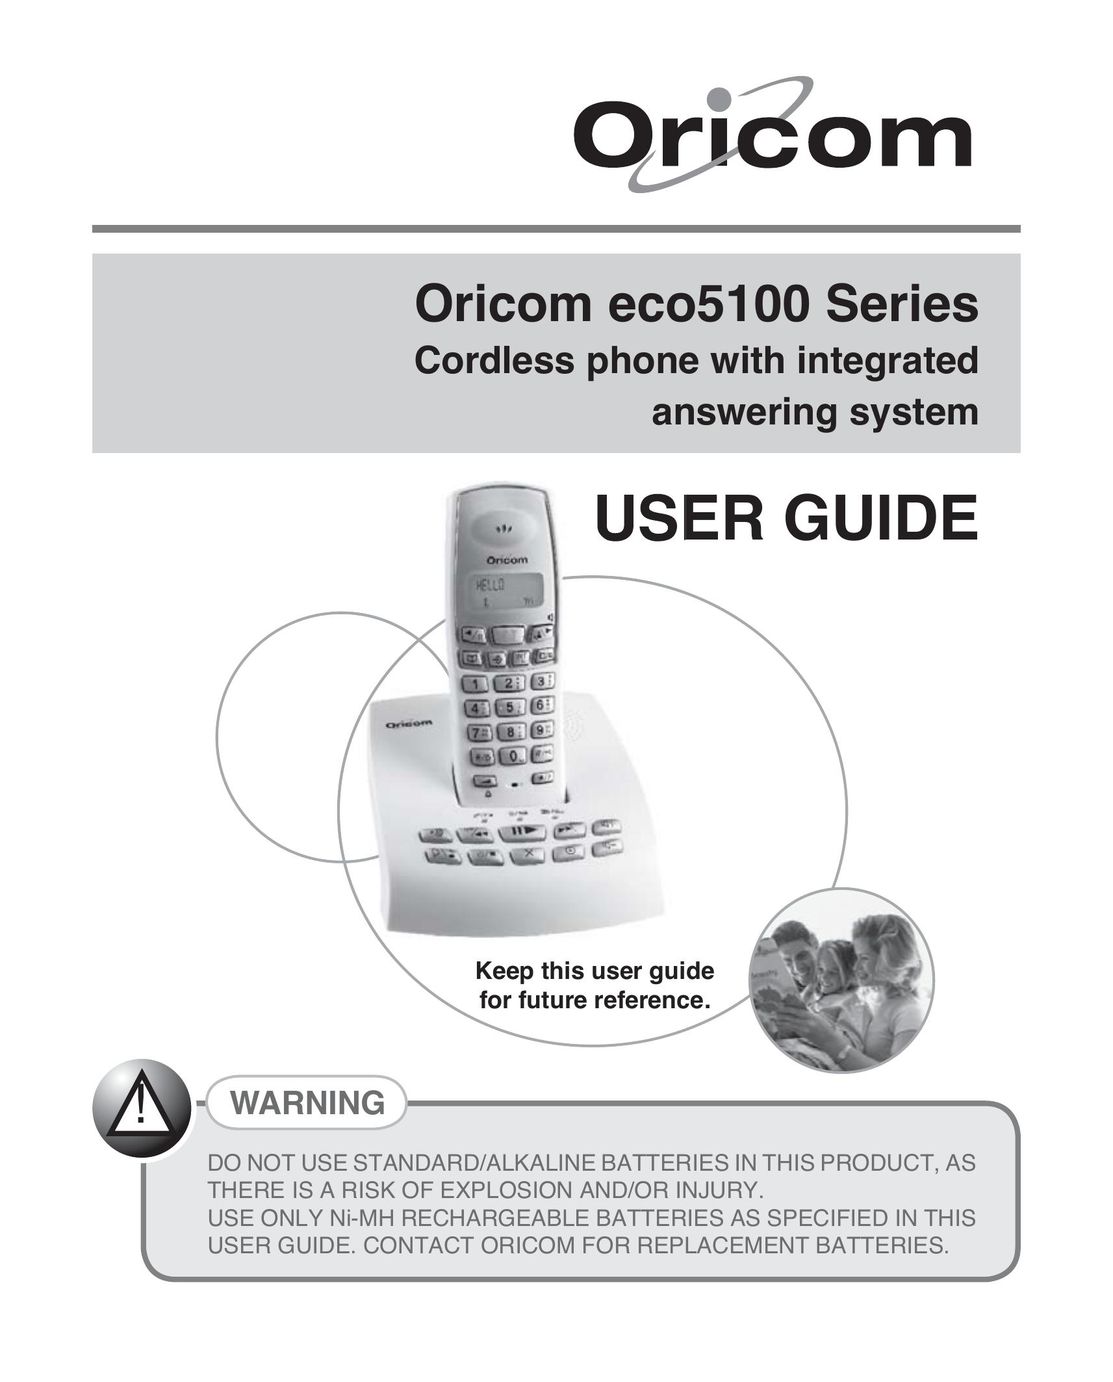 Oricom eco5100 Series Cordless Telephone User Manual